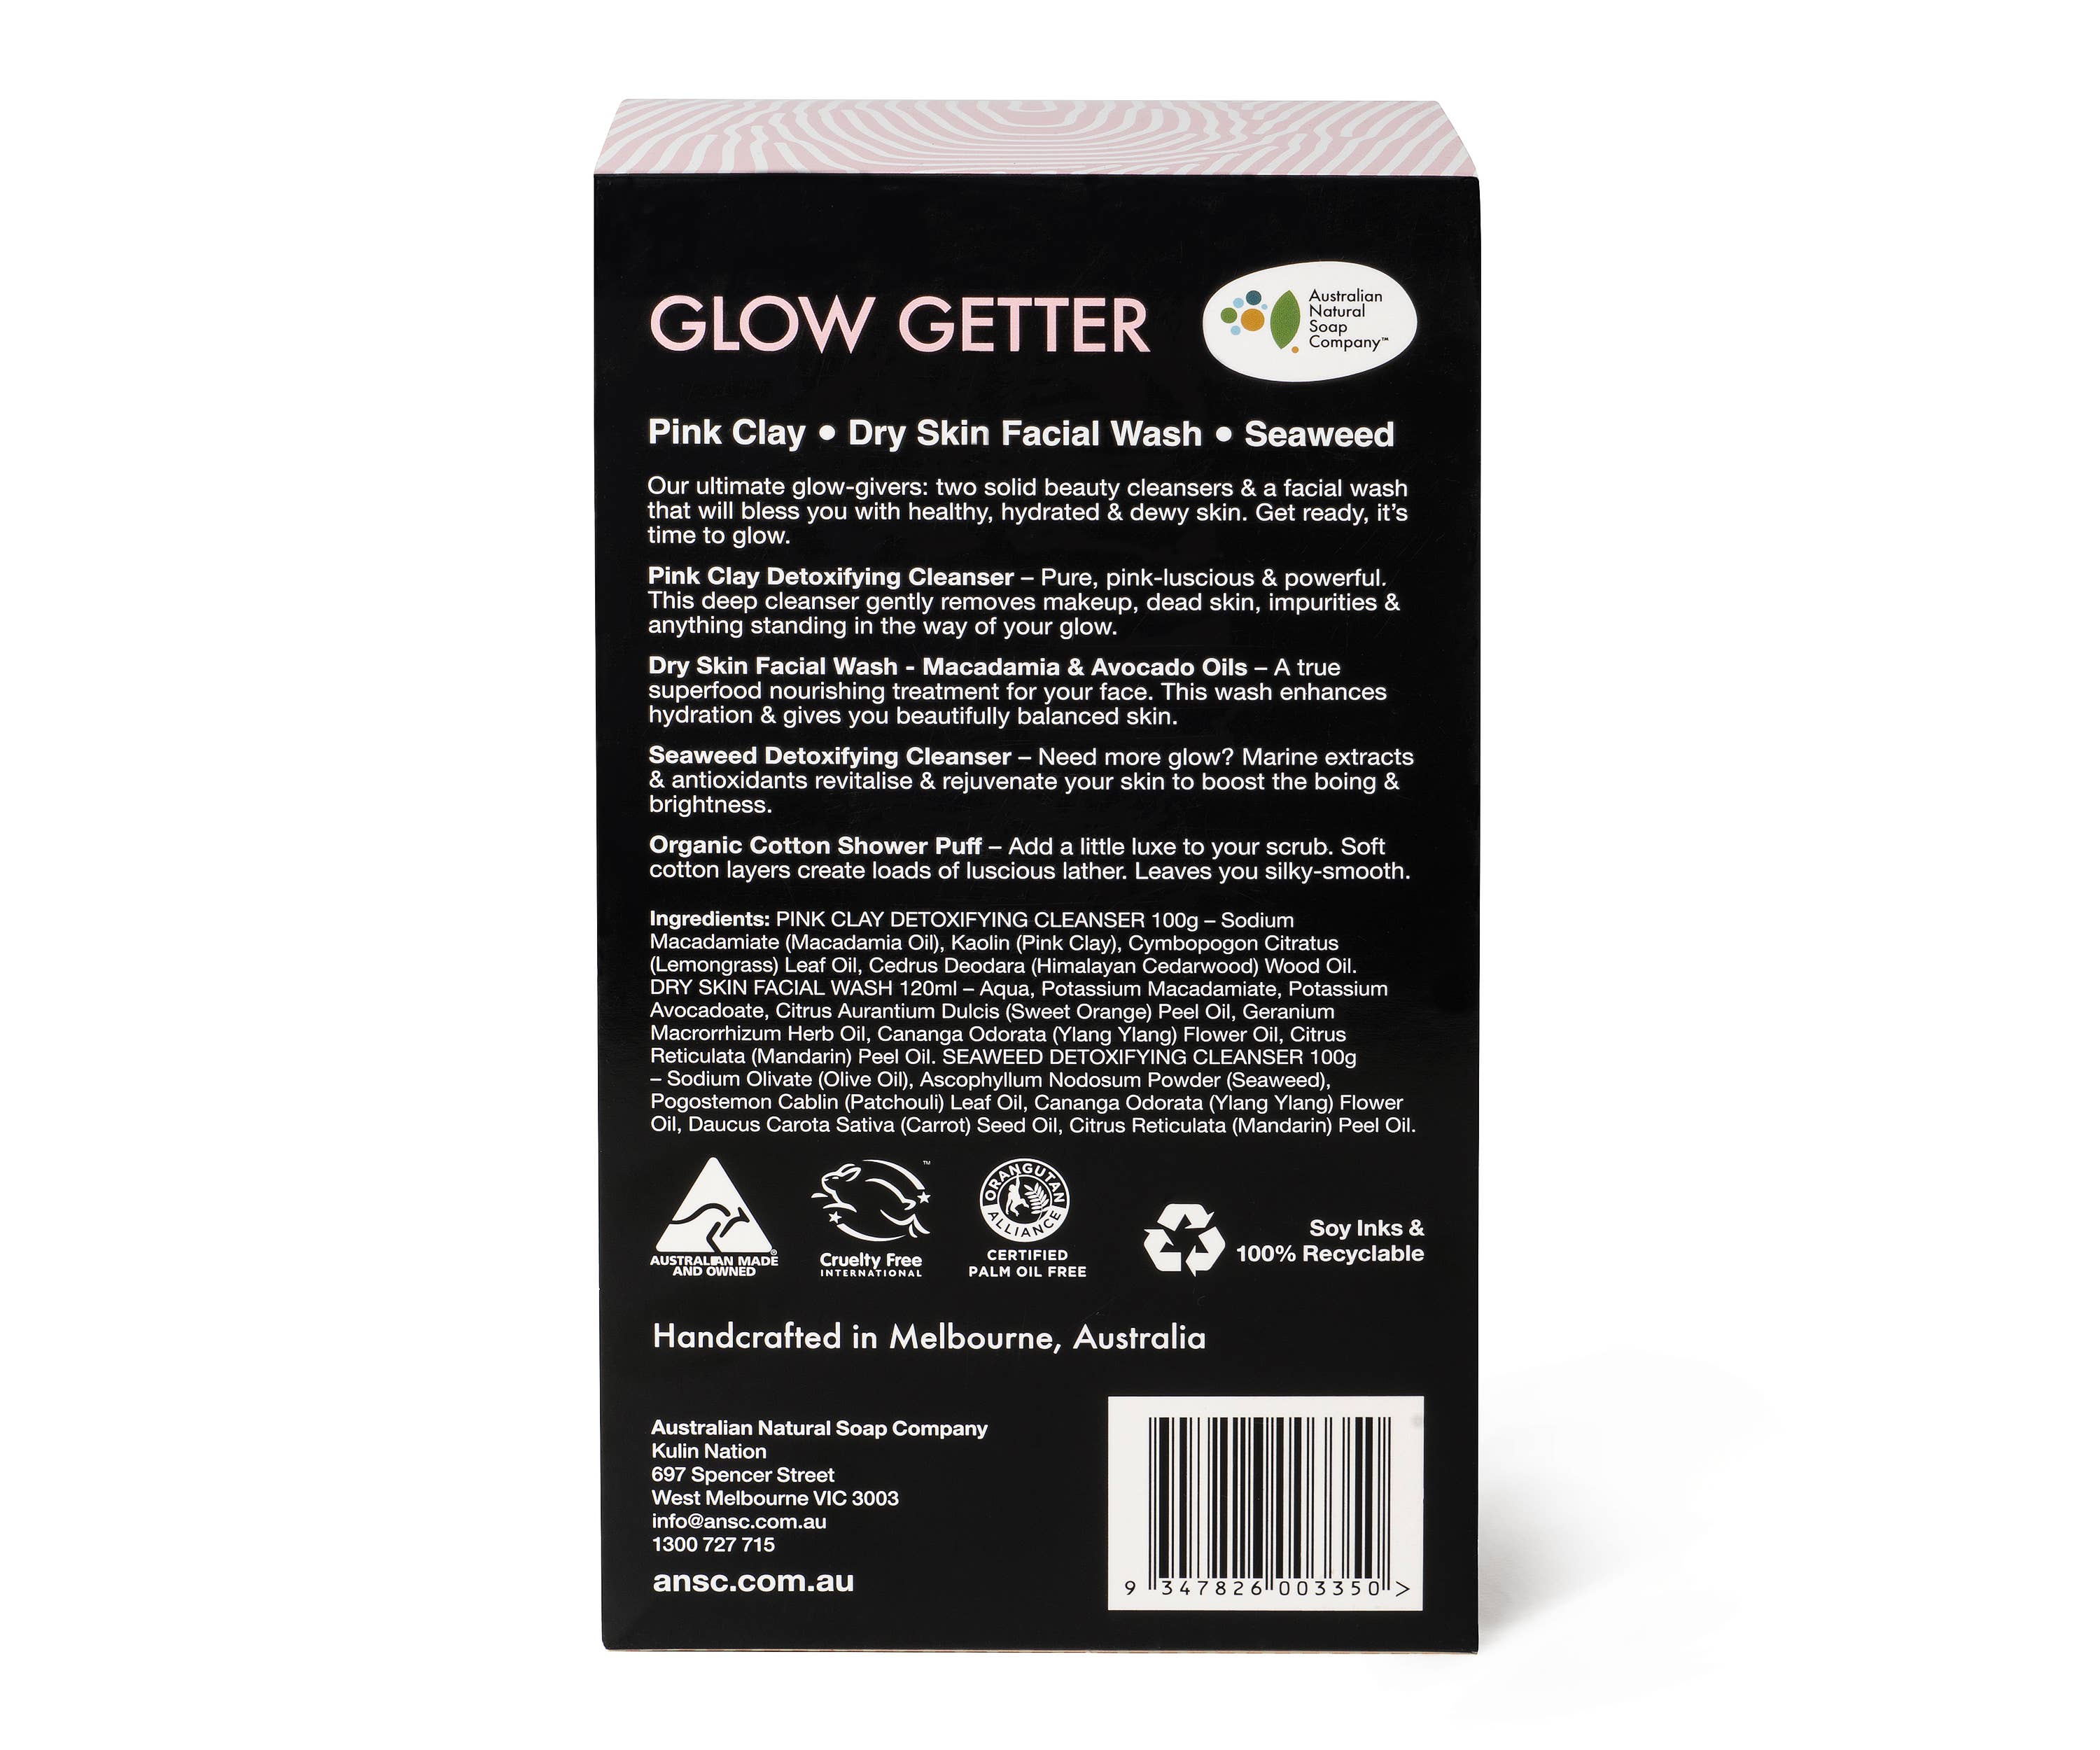 Glow Getter Gift Box